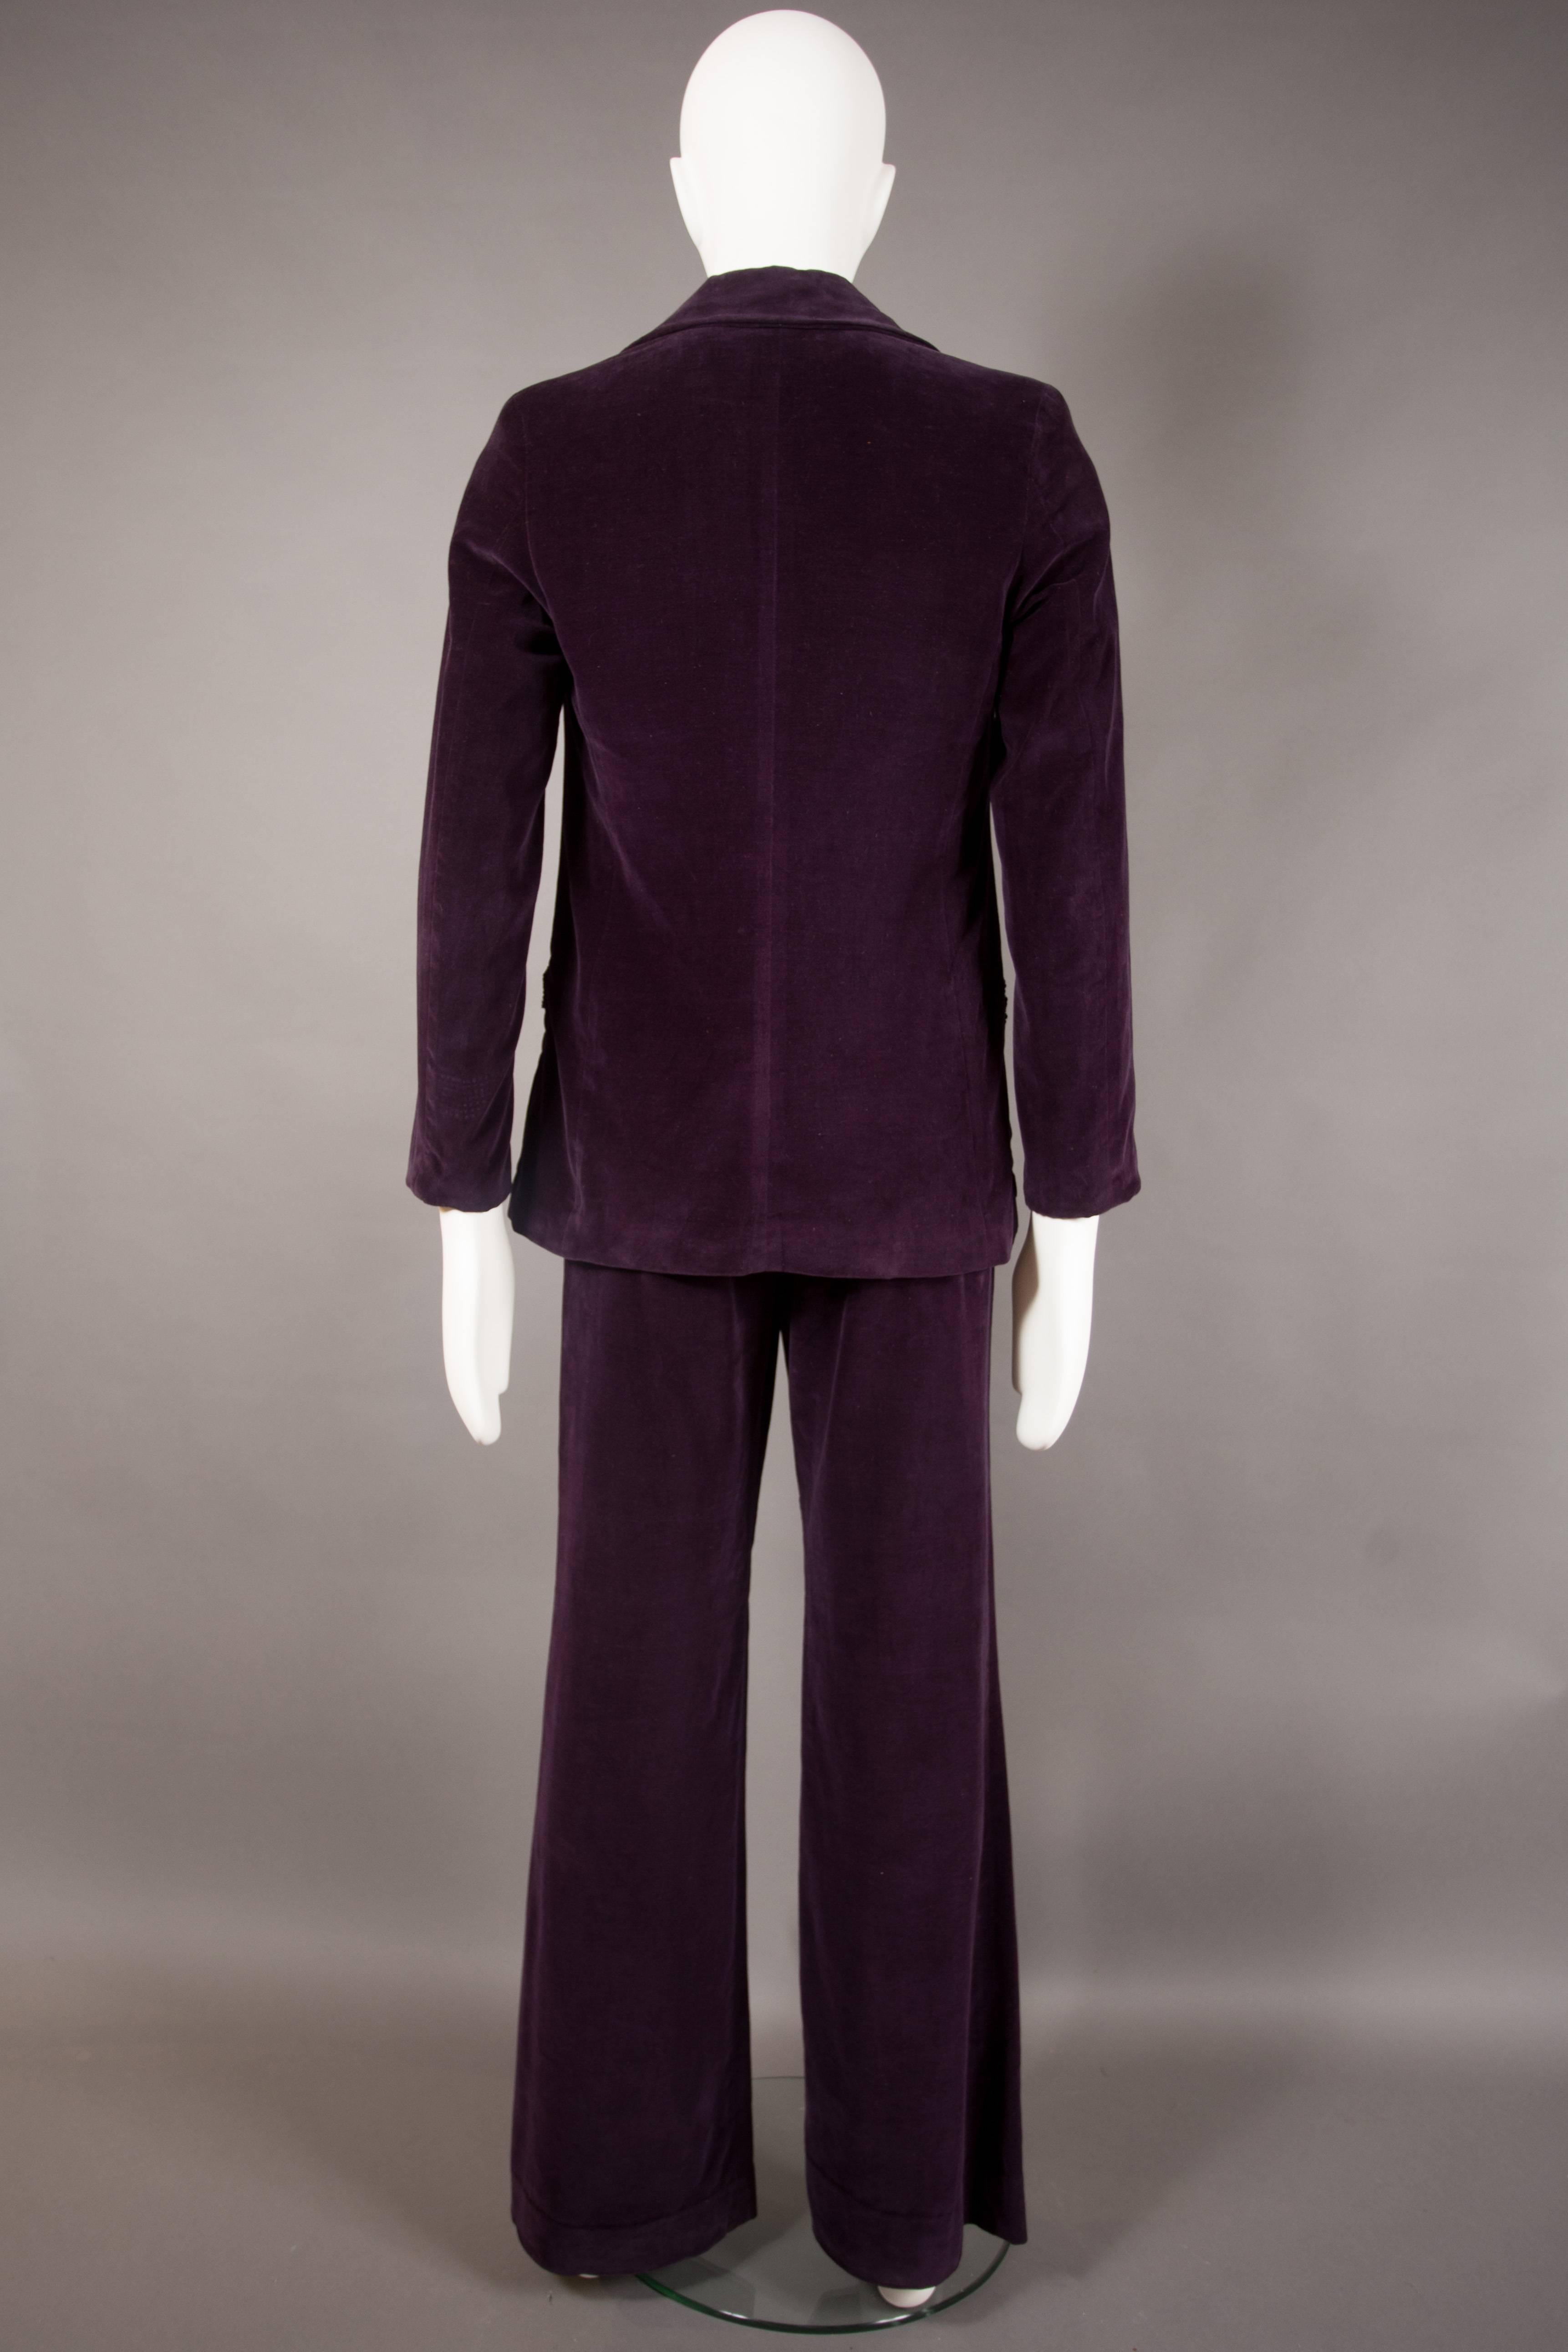 Black Mr Freedom velvet suit with rhinestone trim, circa 1969 